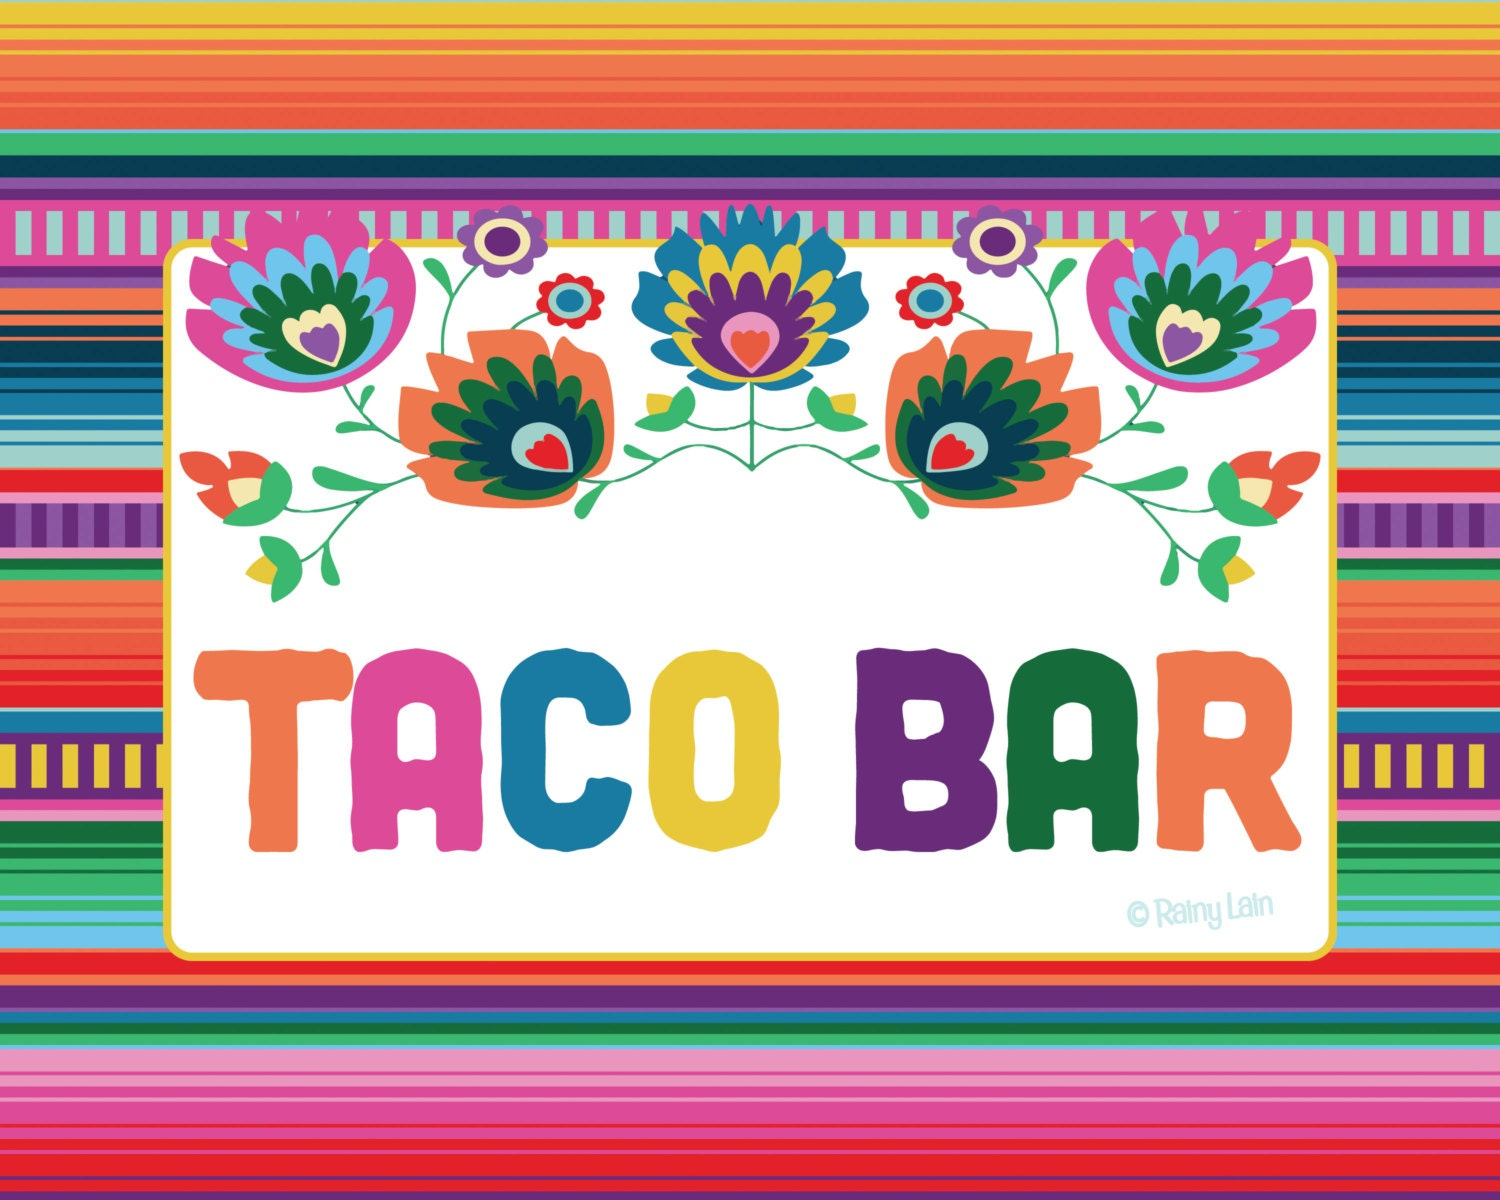 Taco Bar Printable Sign Instant Download Fiesta Graduation